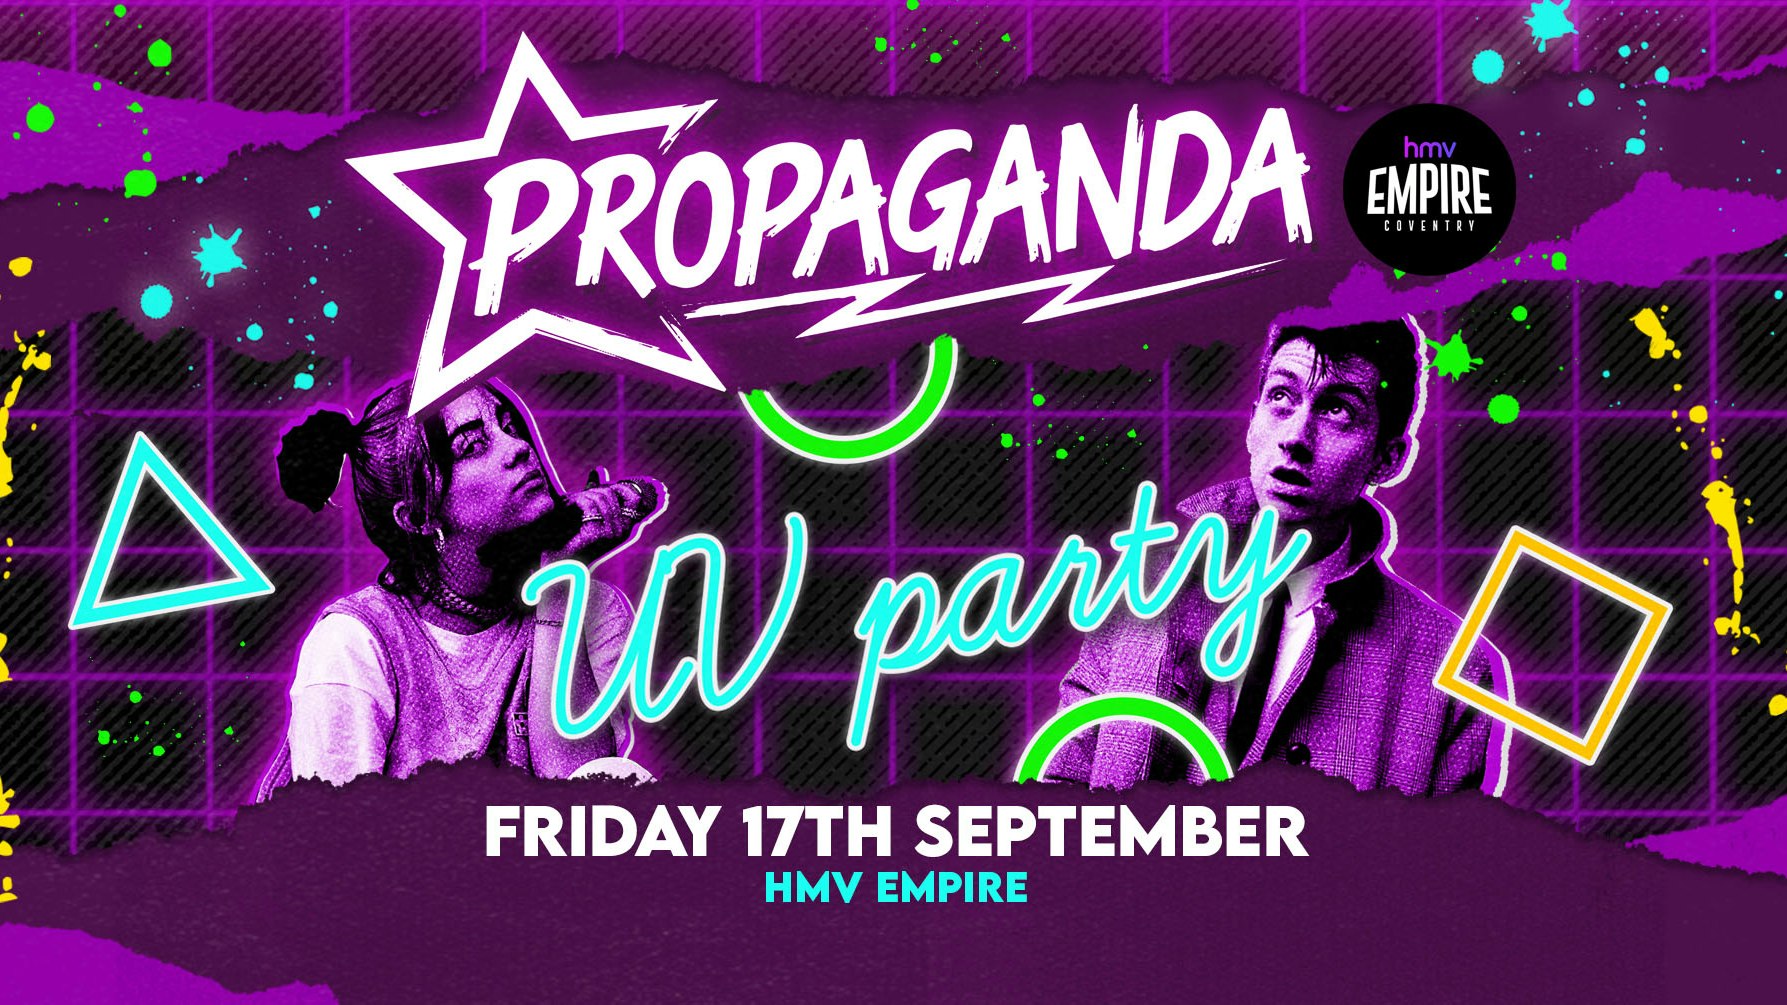 Propaganda Coventry –  UV Party!